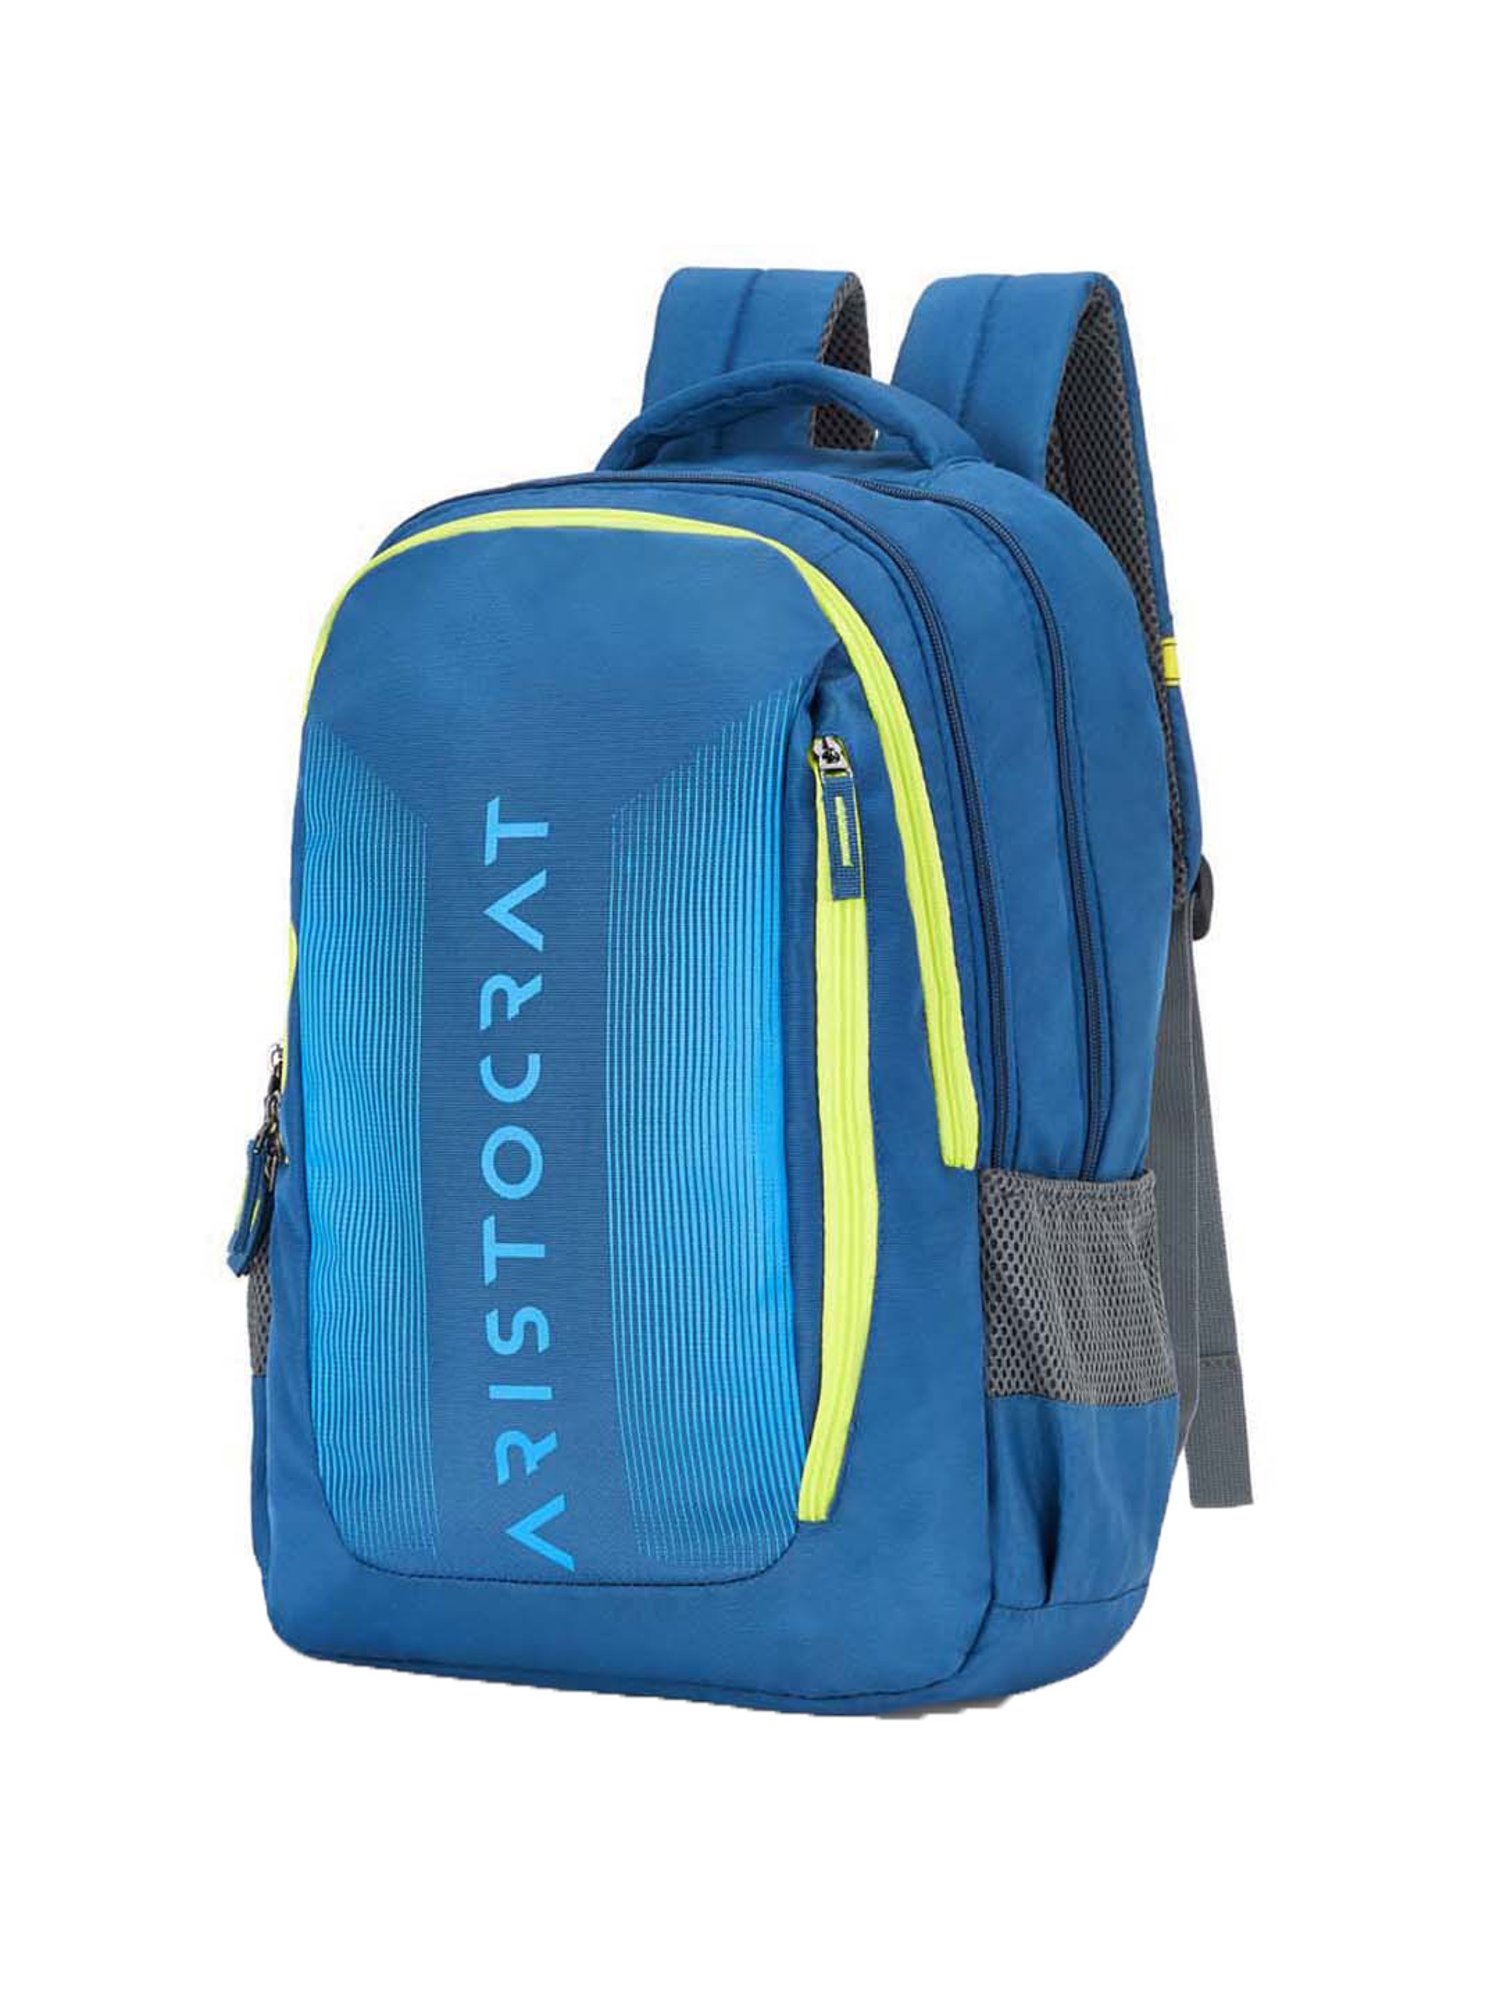 ARISTOCRAT Wego 1 School Bag 34 L Backpack - Price History